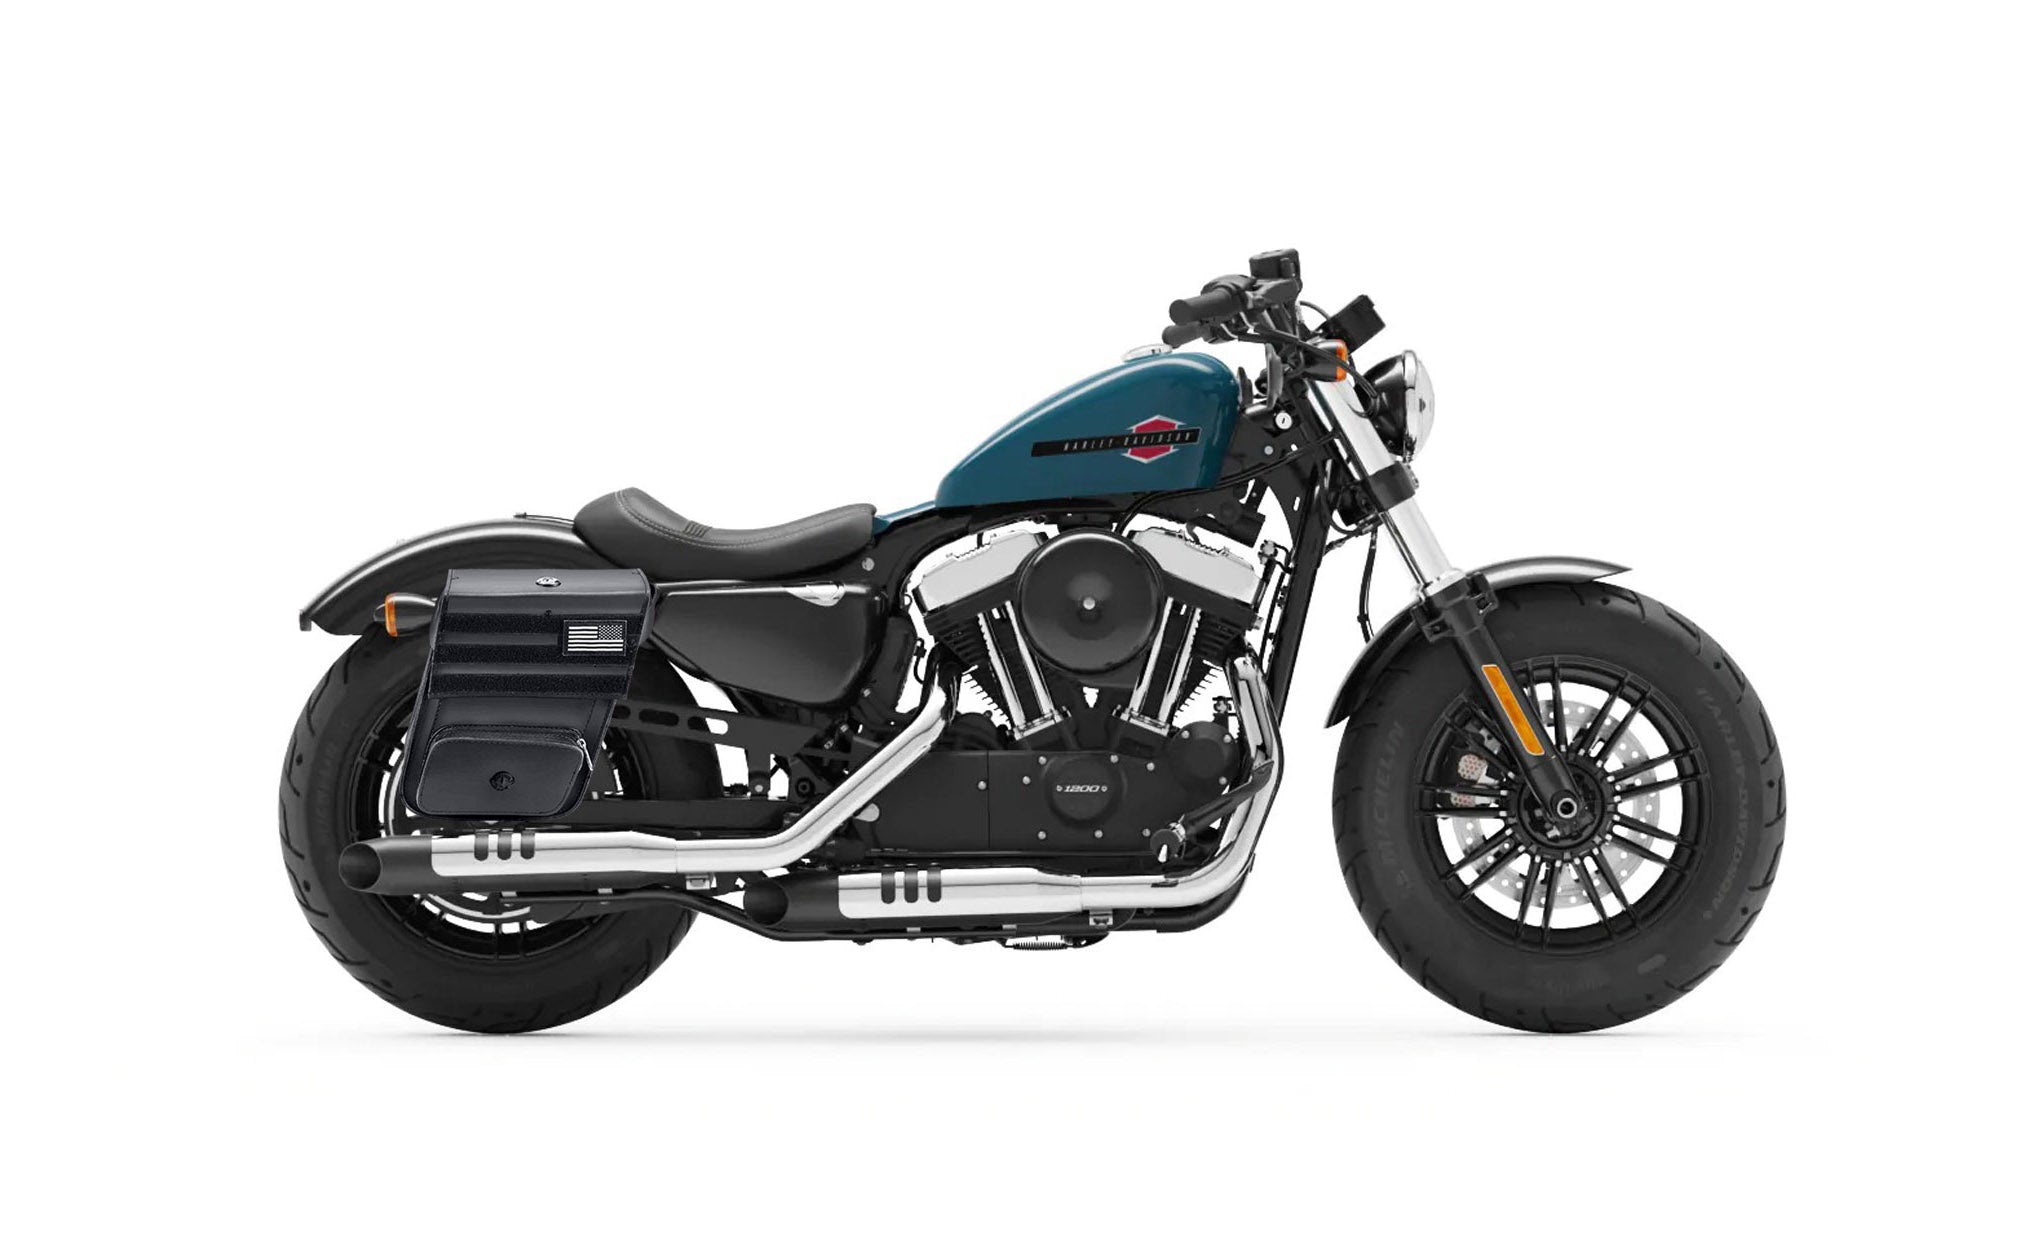 Viking Military Medium Leather Motorcycle Saddlebags For Harley Sportster 48 Xl1200X on Bike Photo @expand